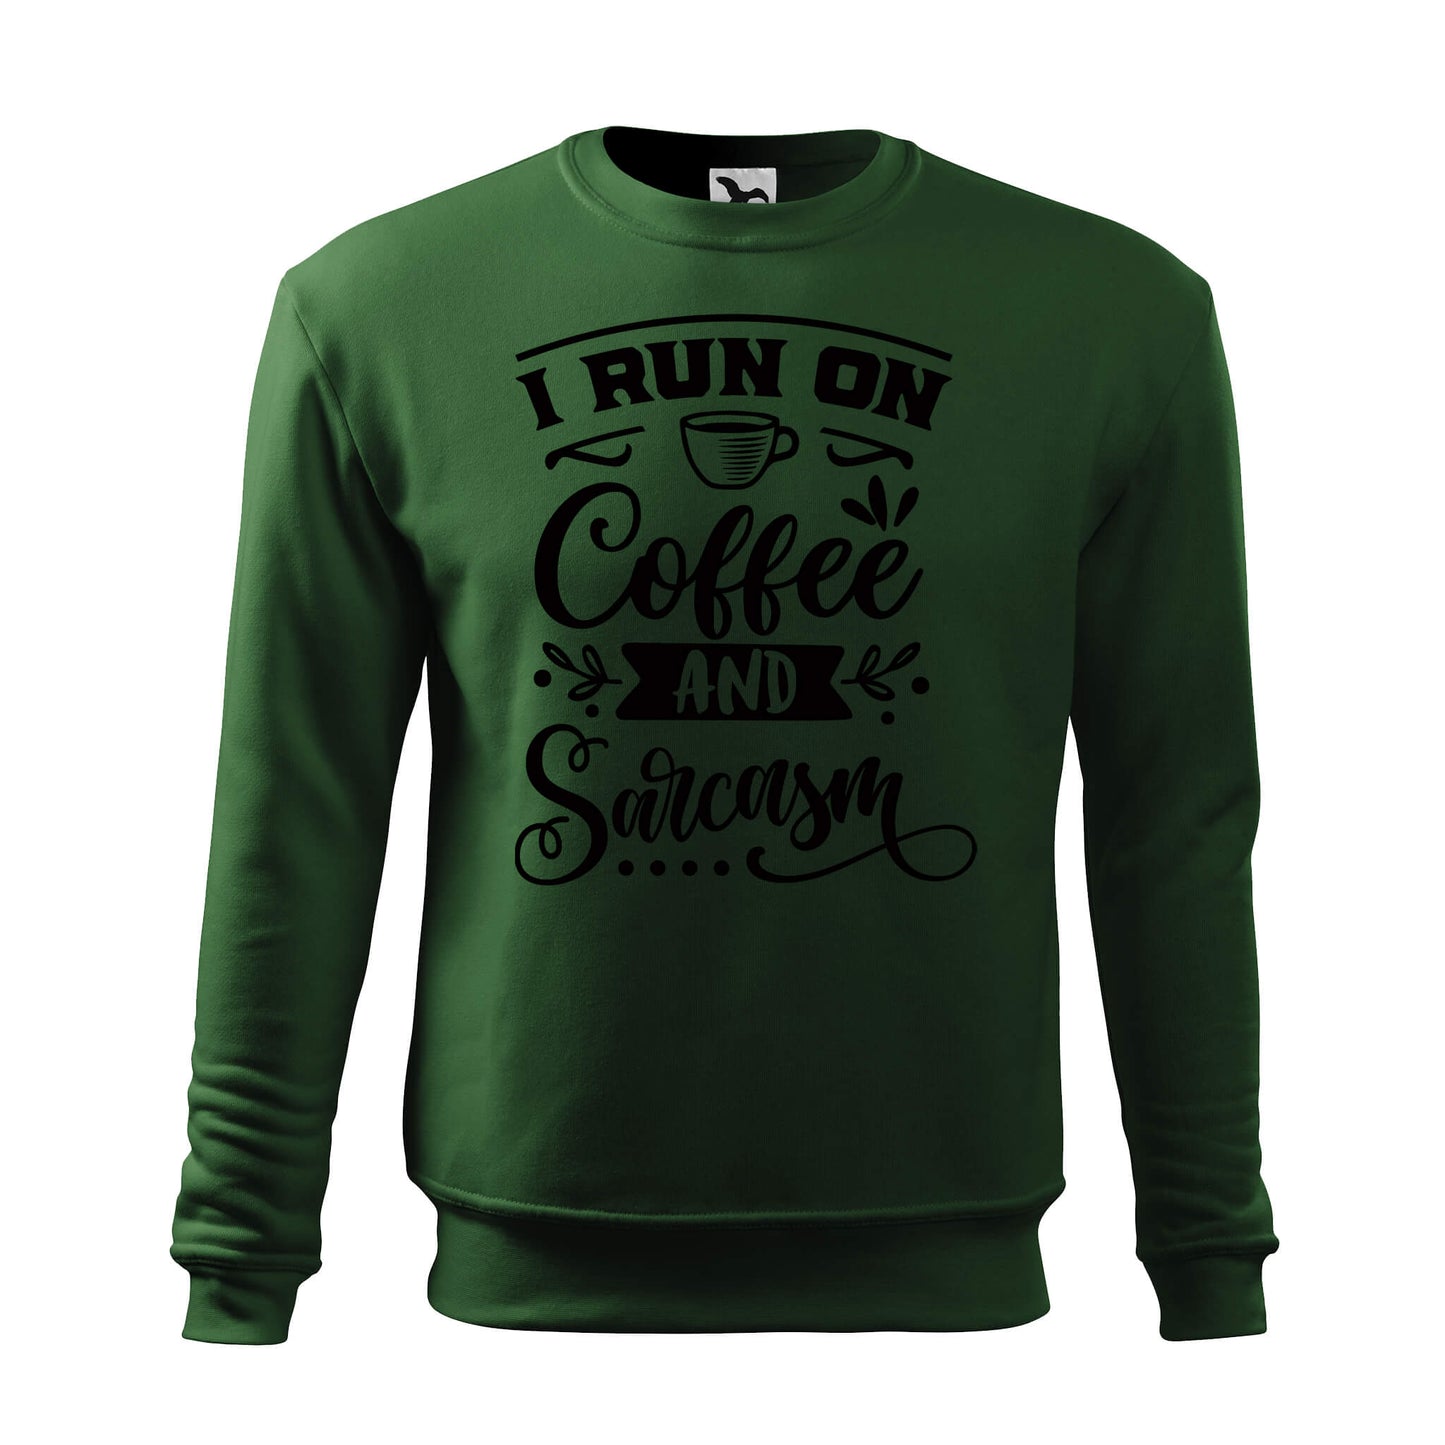 I run on coffee and sarcasm sweatshirt - rvdesignprint